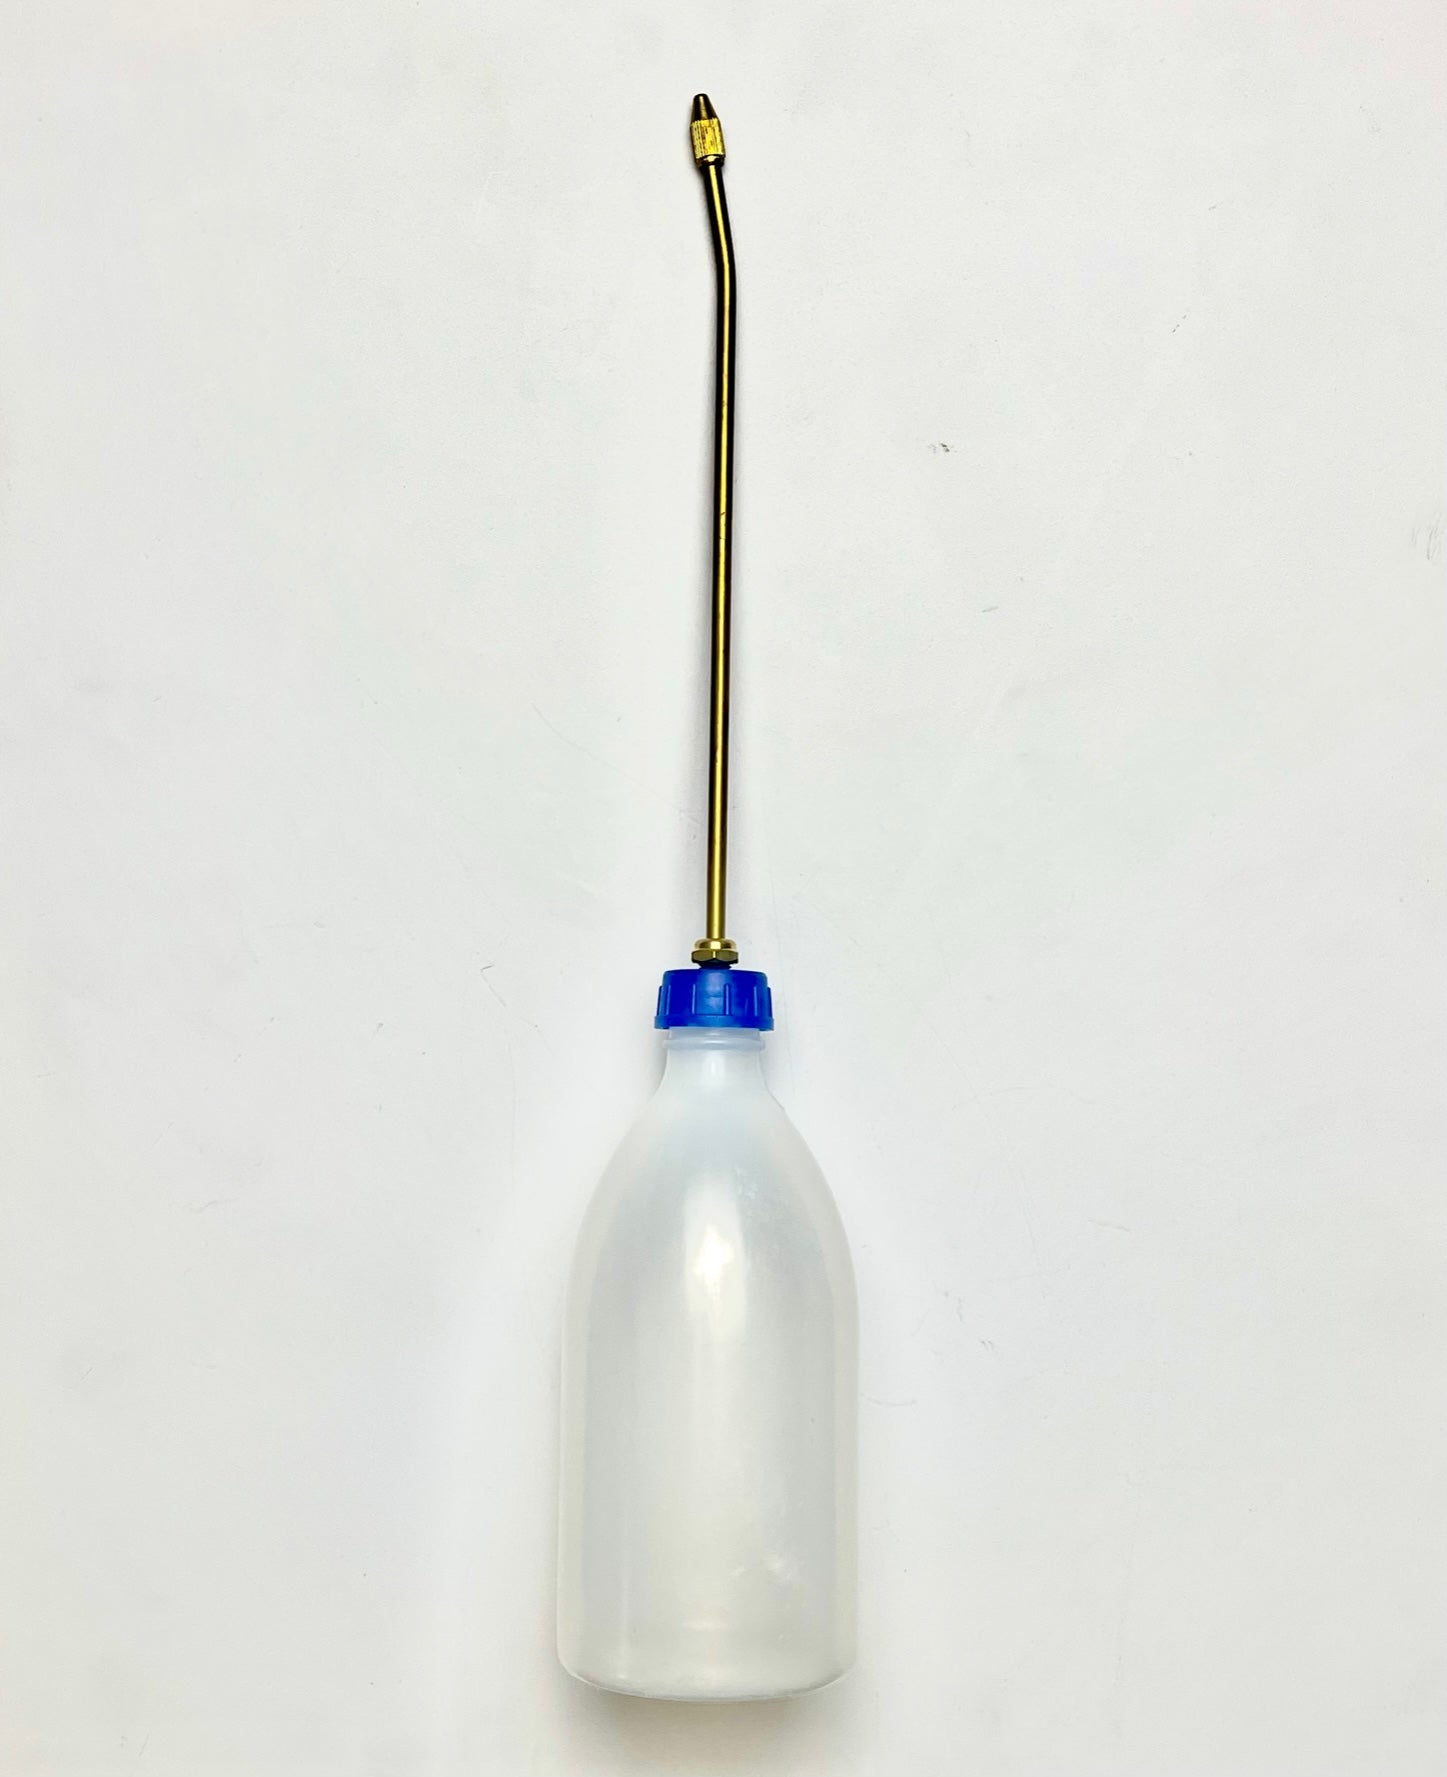 Plastic Squeeze Bottle, 8oz :: Gear Oil for Counterbalances :: Oil